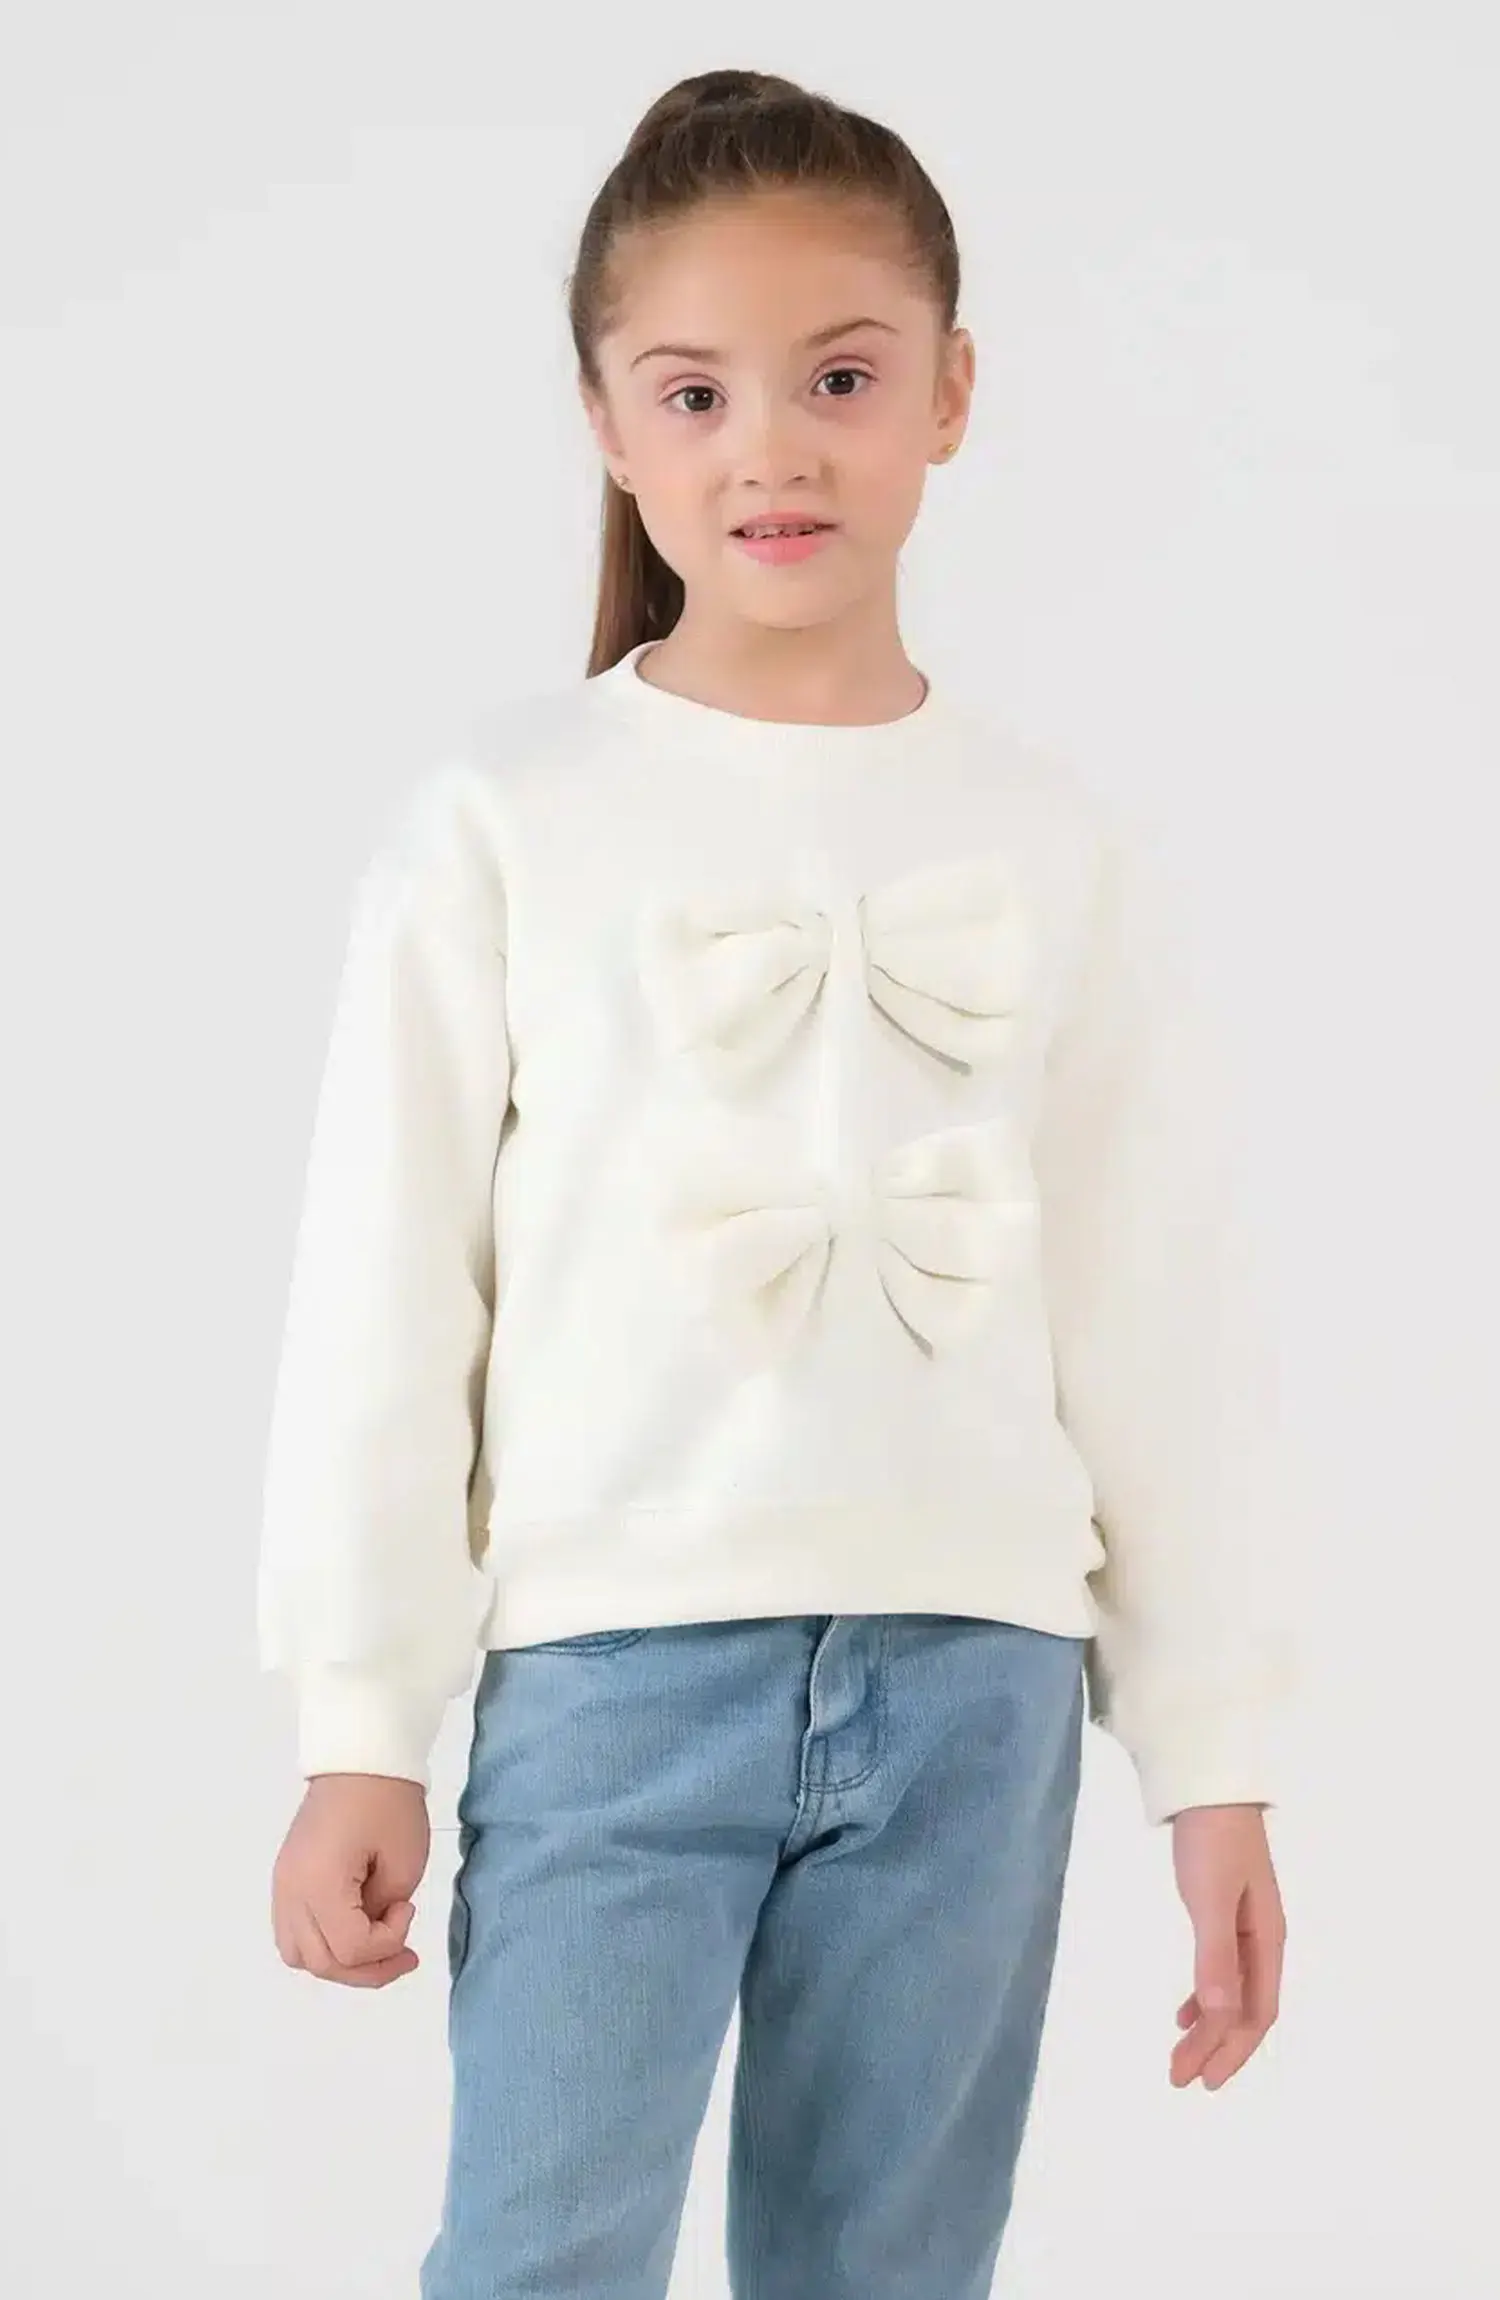 Sprinkles Kids Winter Collection - Bow Charm Sweatshirt – Cream White